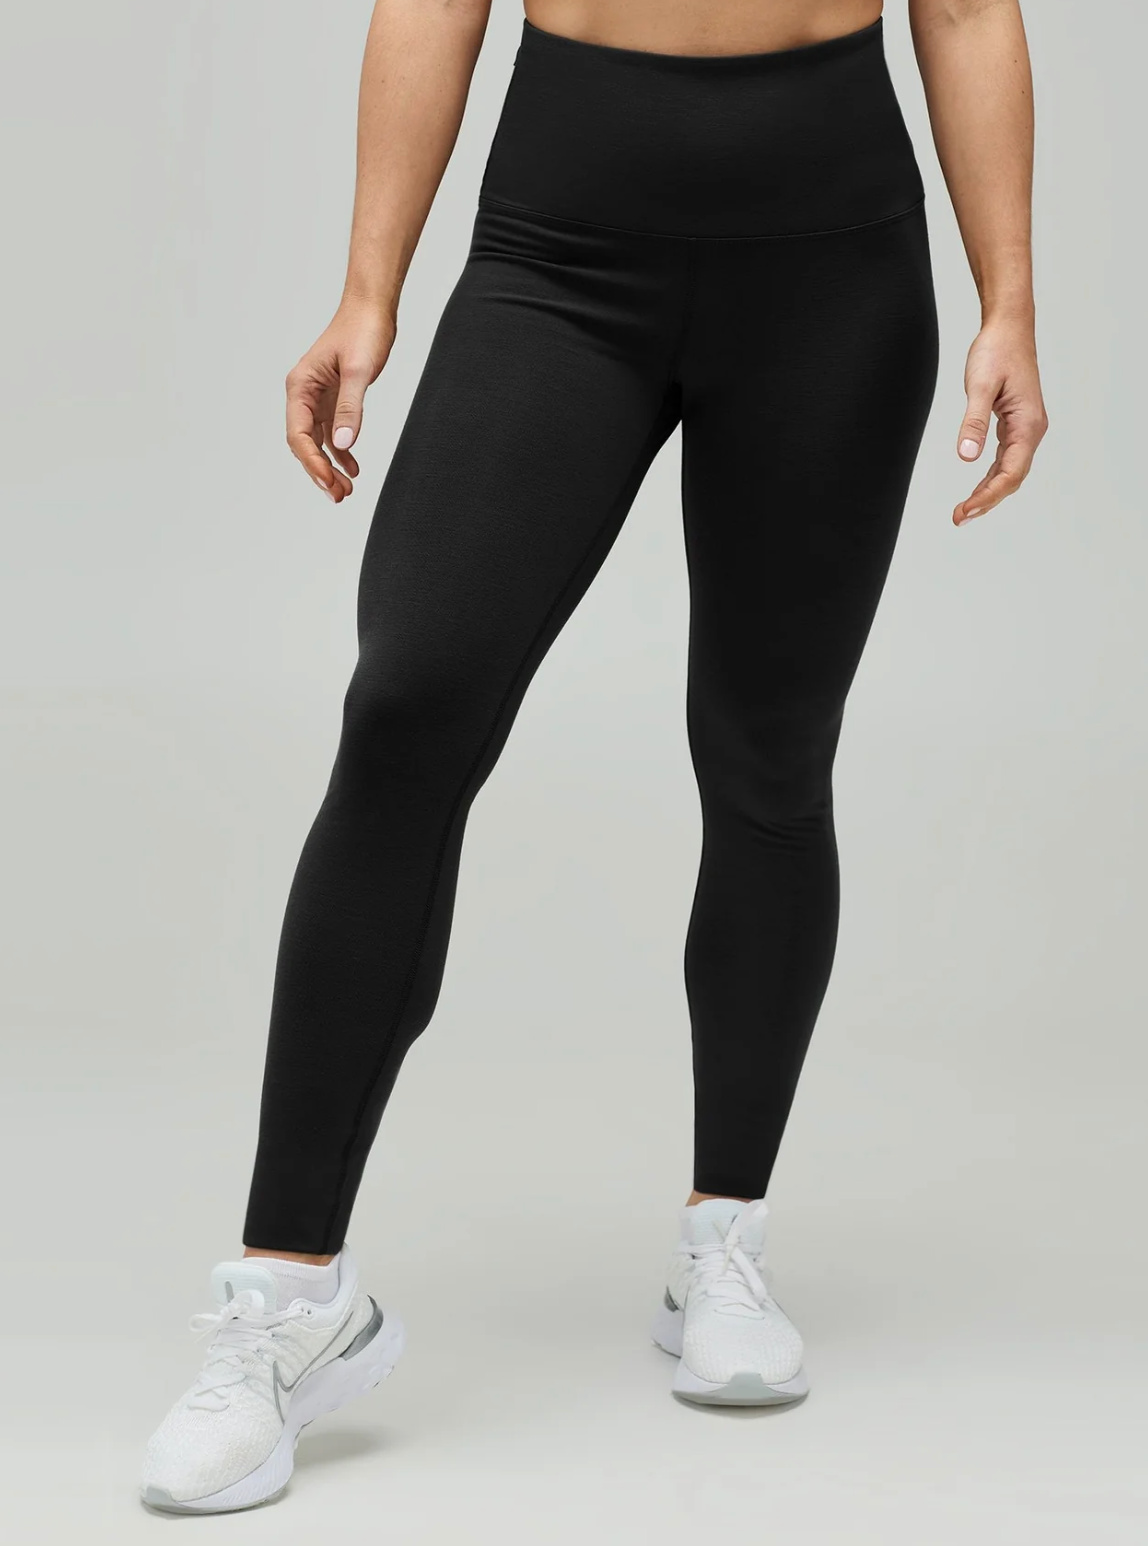 jsaierl Super Thick Cashmere Leggings for Women,Premium Women's Fleece  Lined Legging Wool Warm High Waist Elastic Yoga Slim Pant - Walmart.com